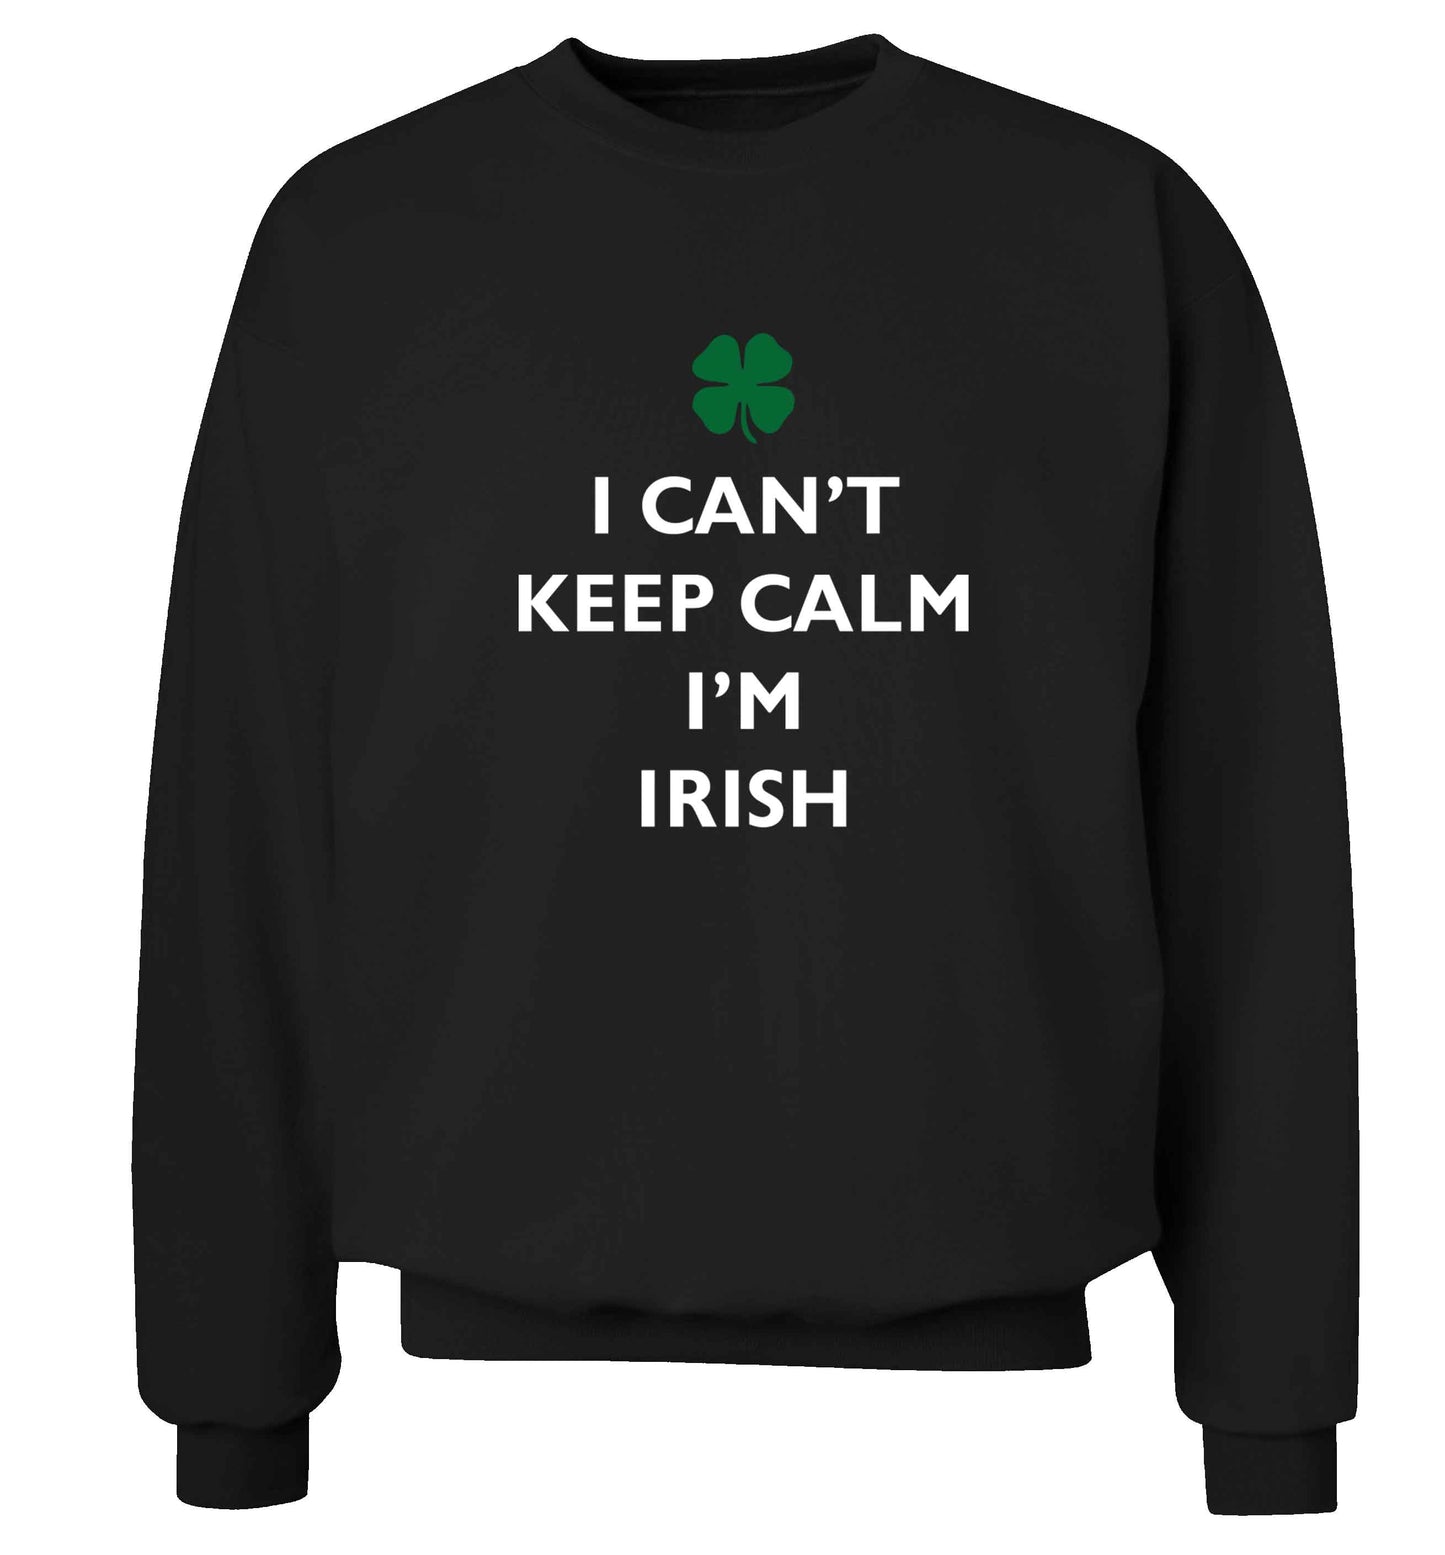 I can't keep calm I'm Irish adult's unisex black sweater 2XL